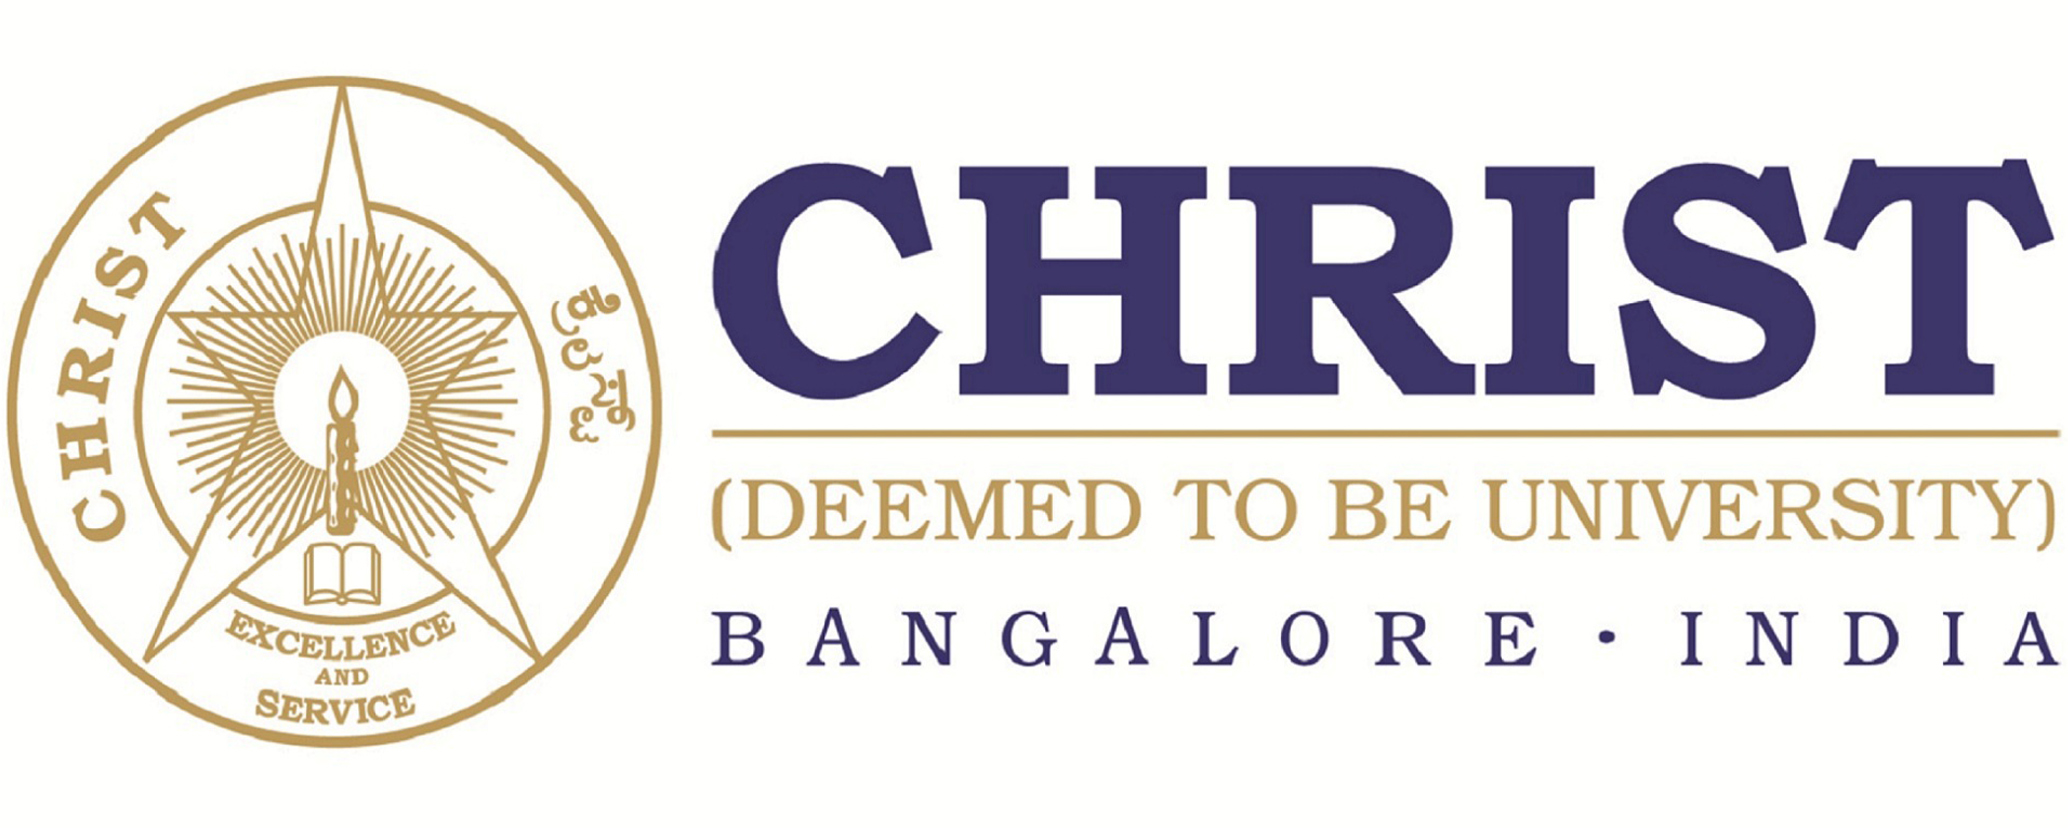 Christ University Logo